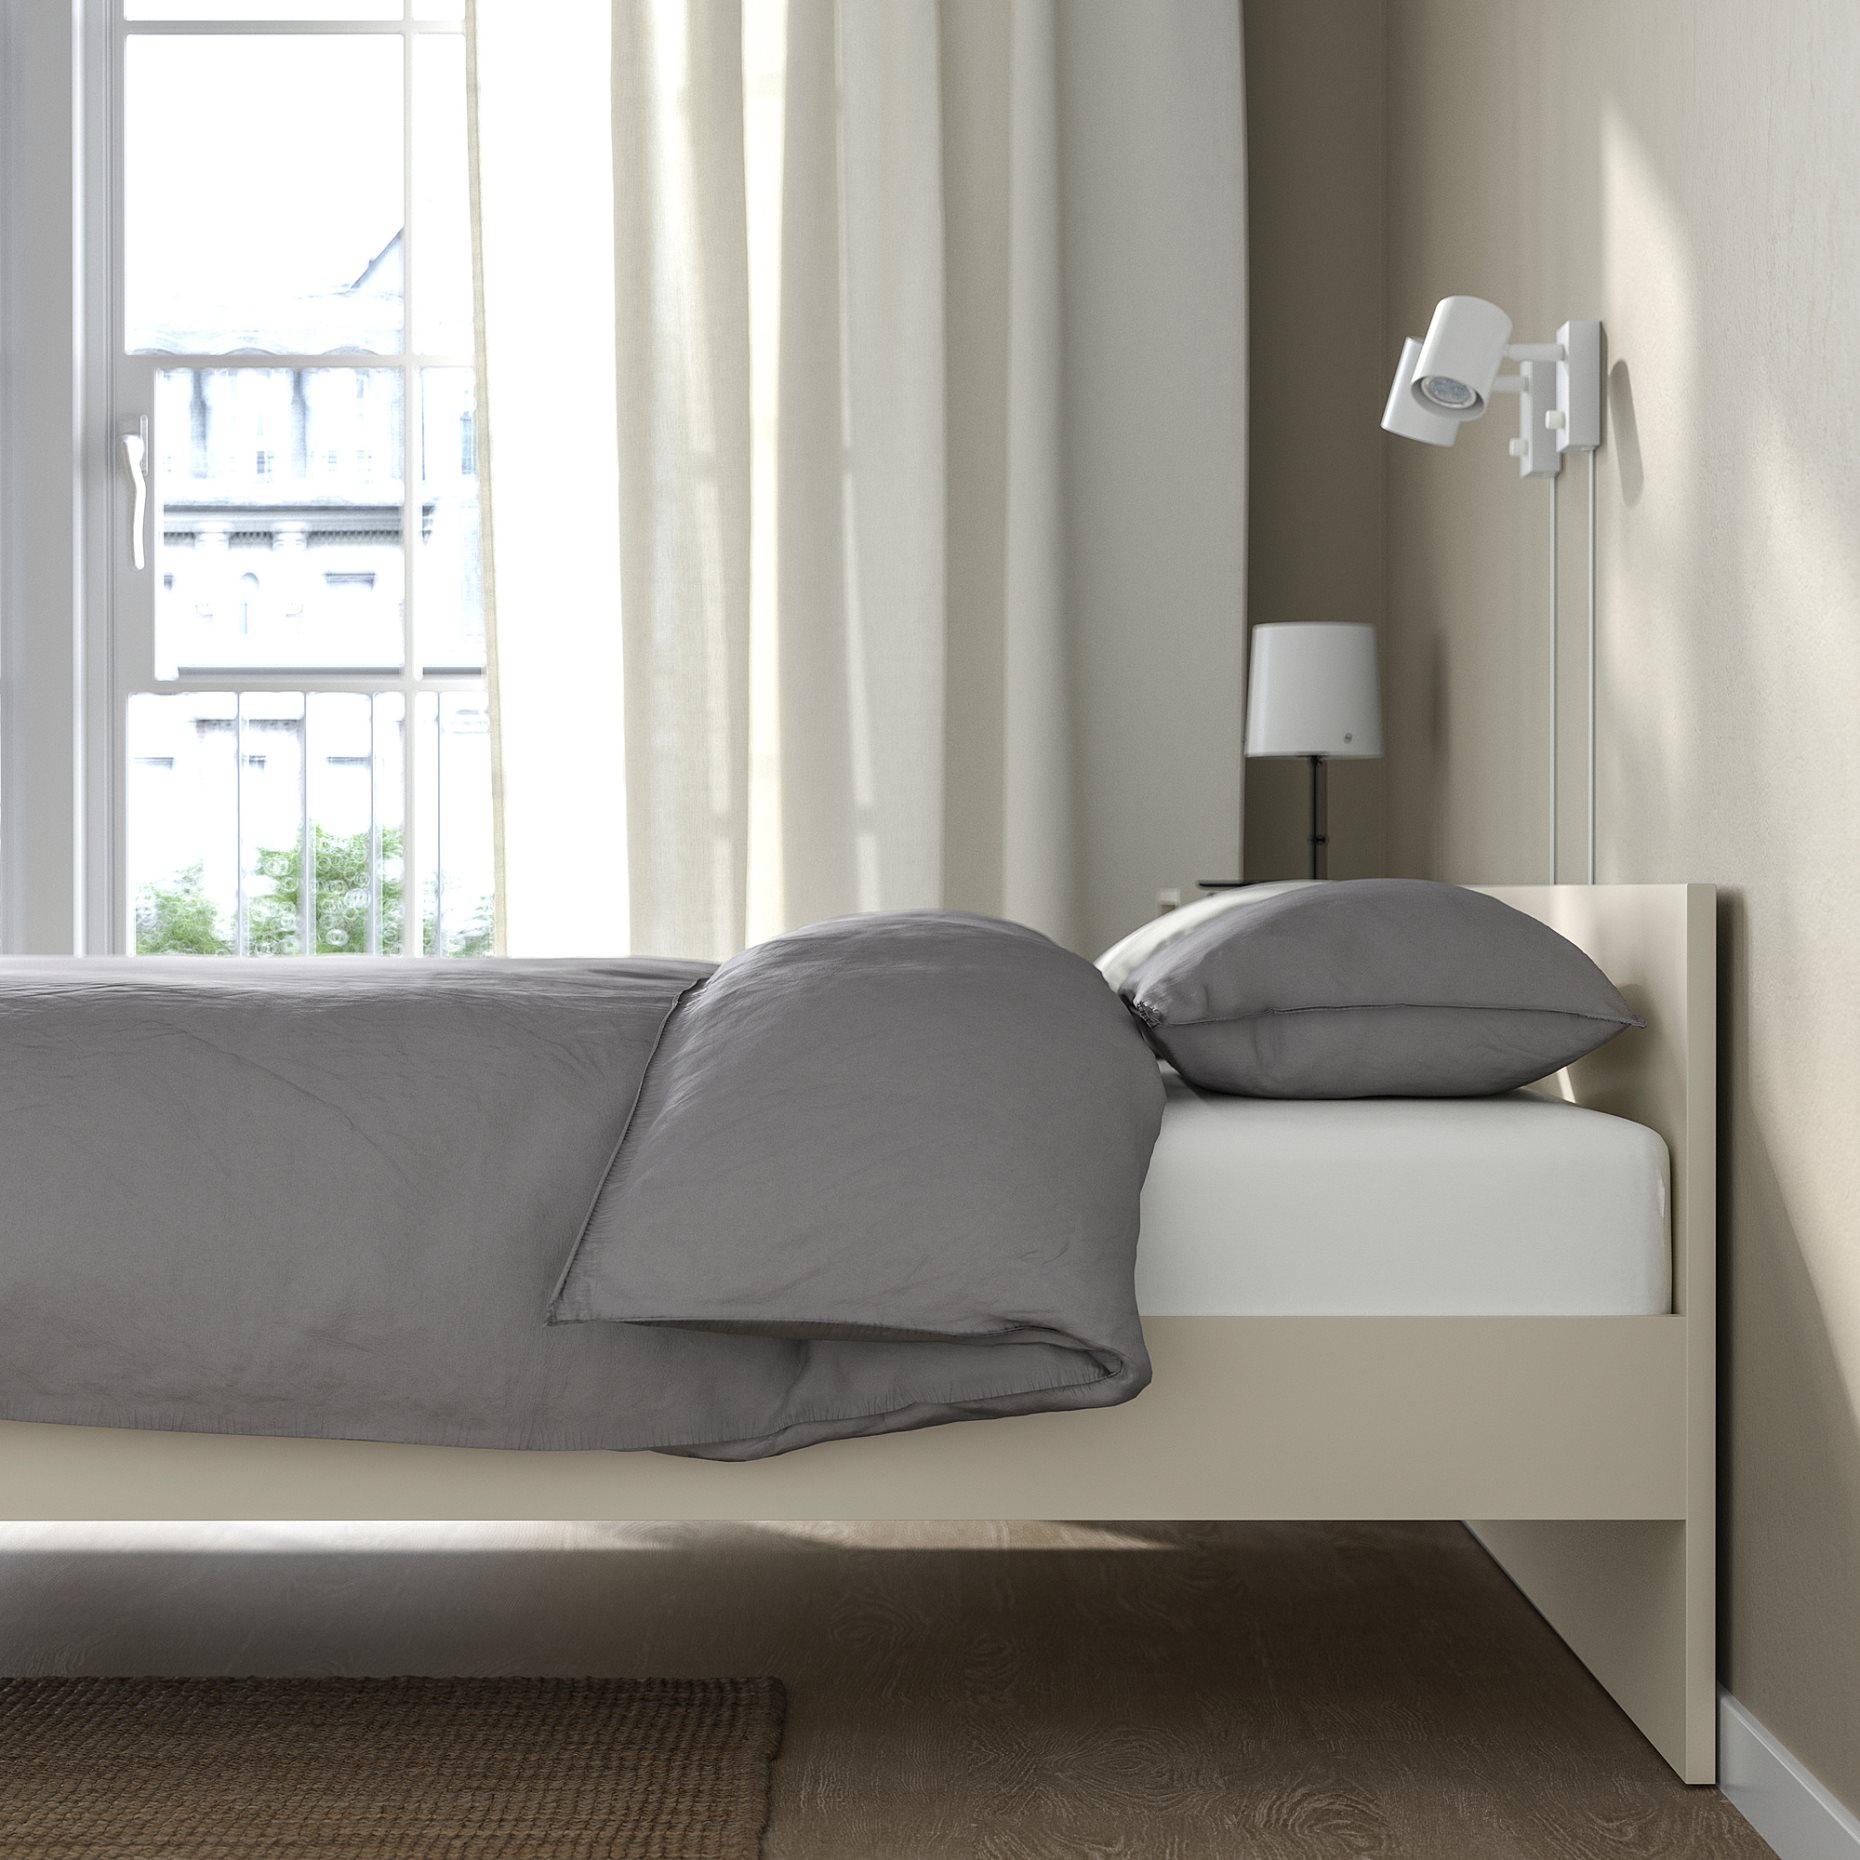 GURSKEN, bed frame with headboard, 140x200 cm, 604.863.29